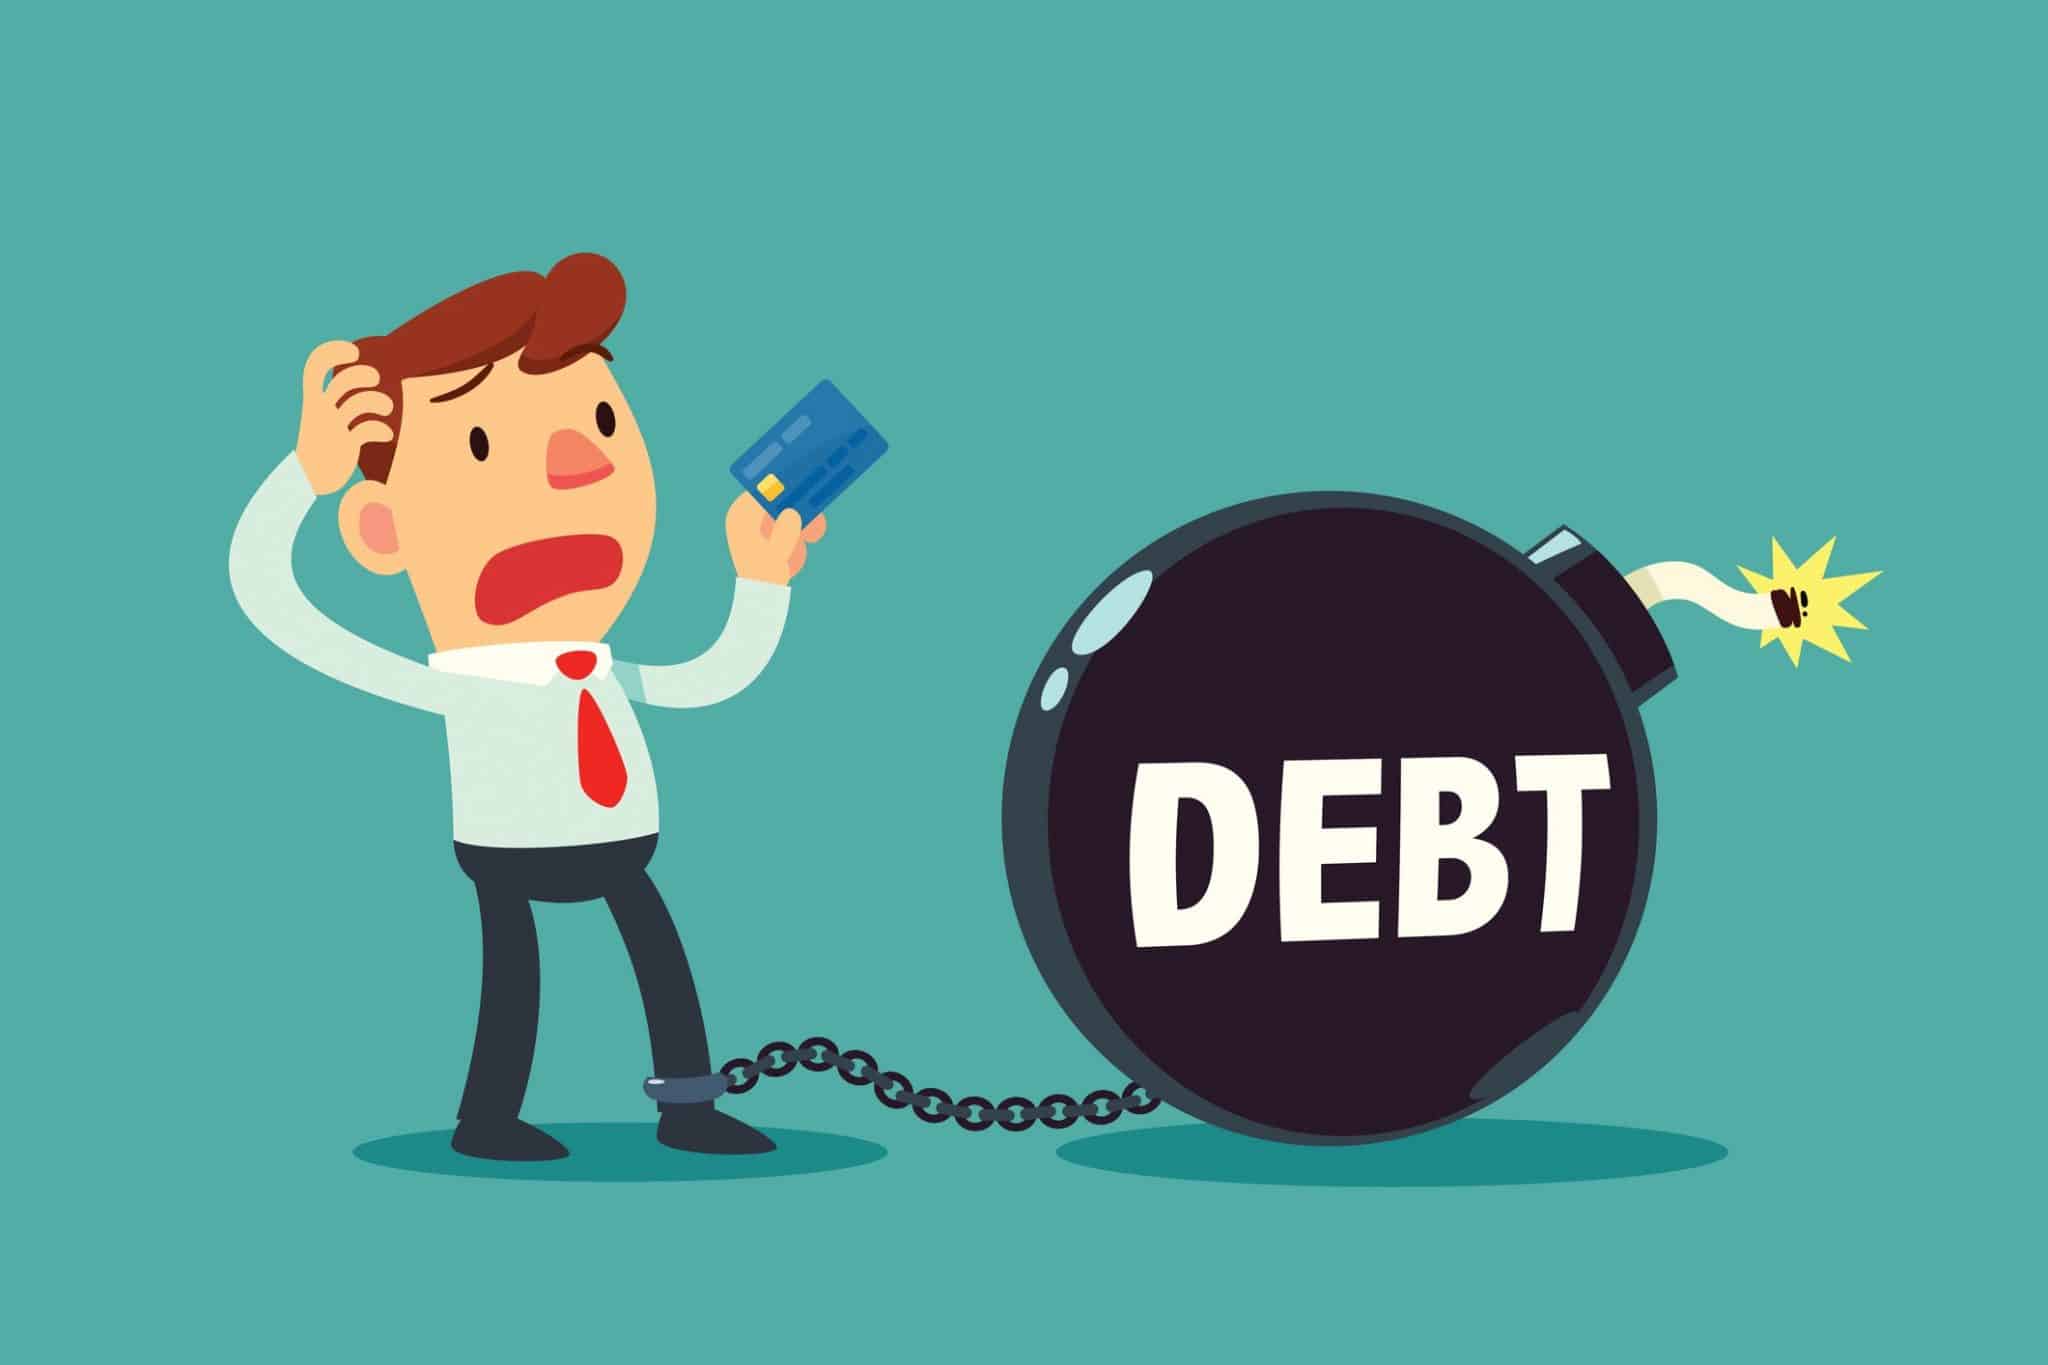 Credit card debt image